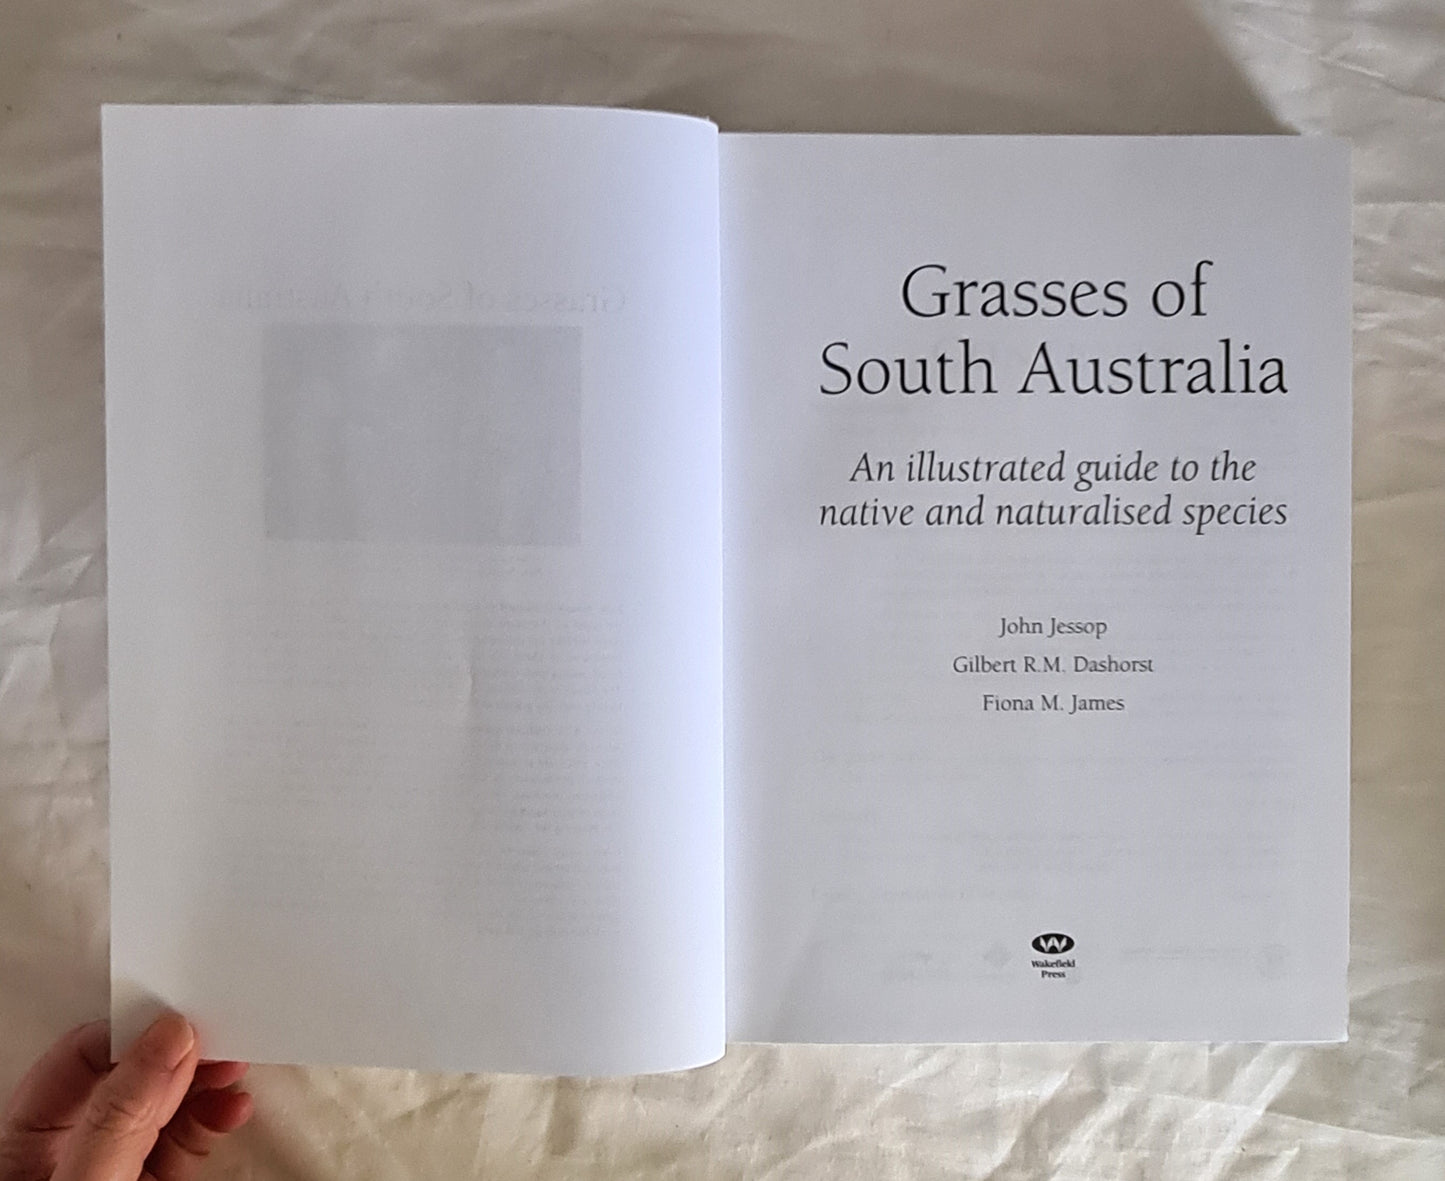 Grasses of South Australia by John Jessop, Gilbert R. M. Dashorst and Fiona M. James